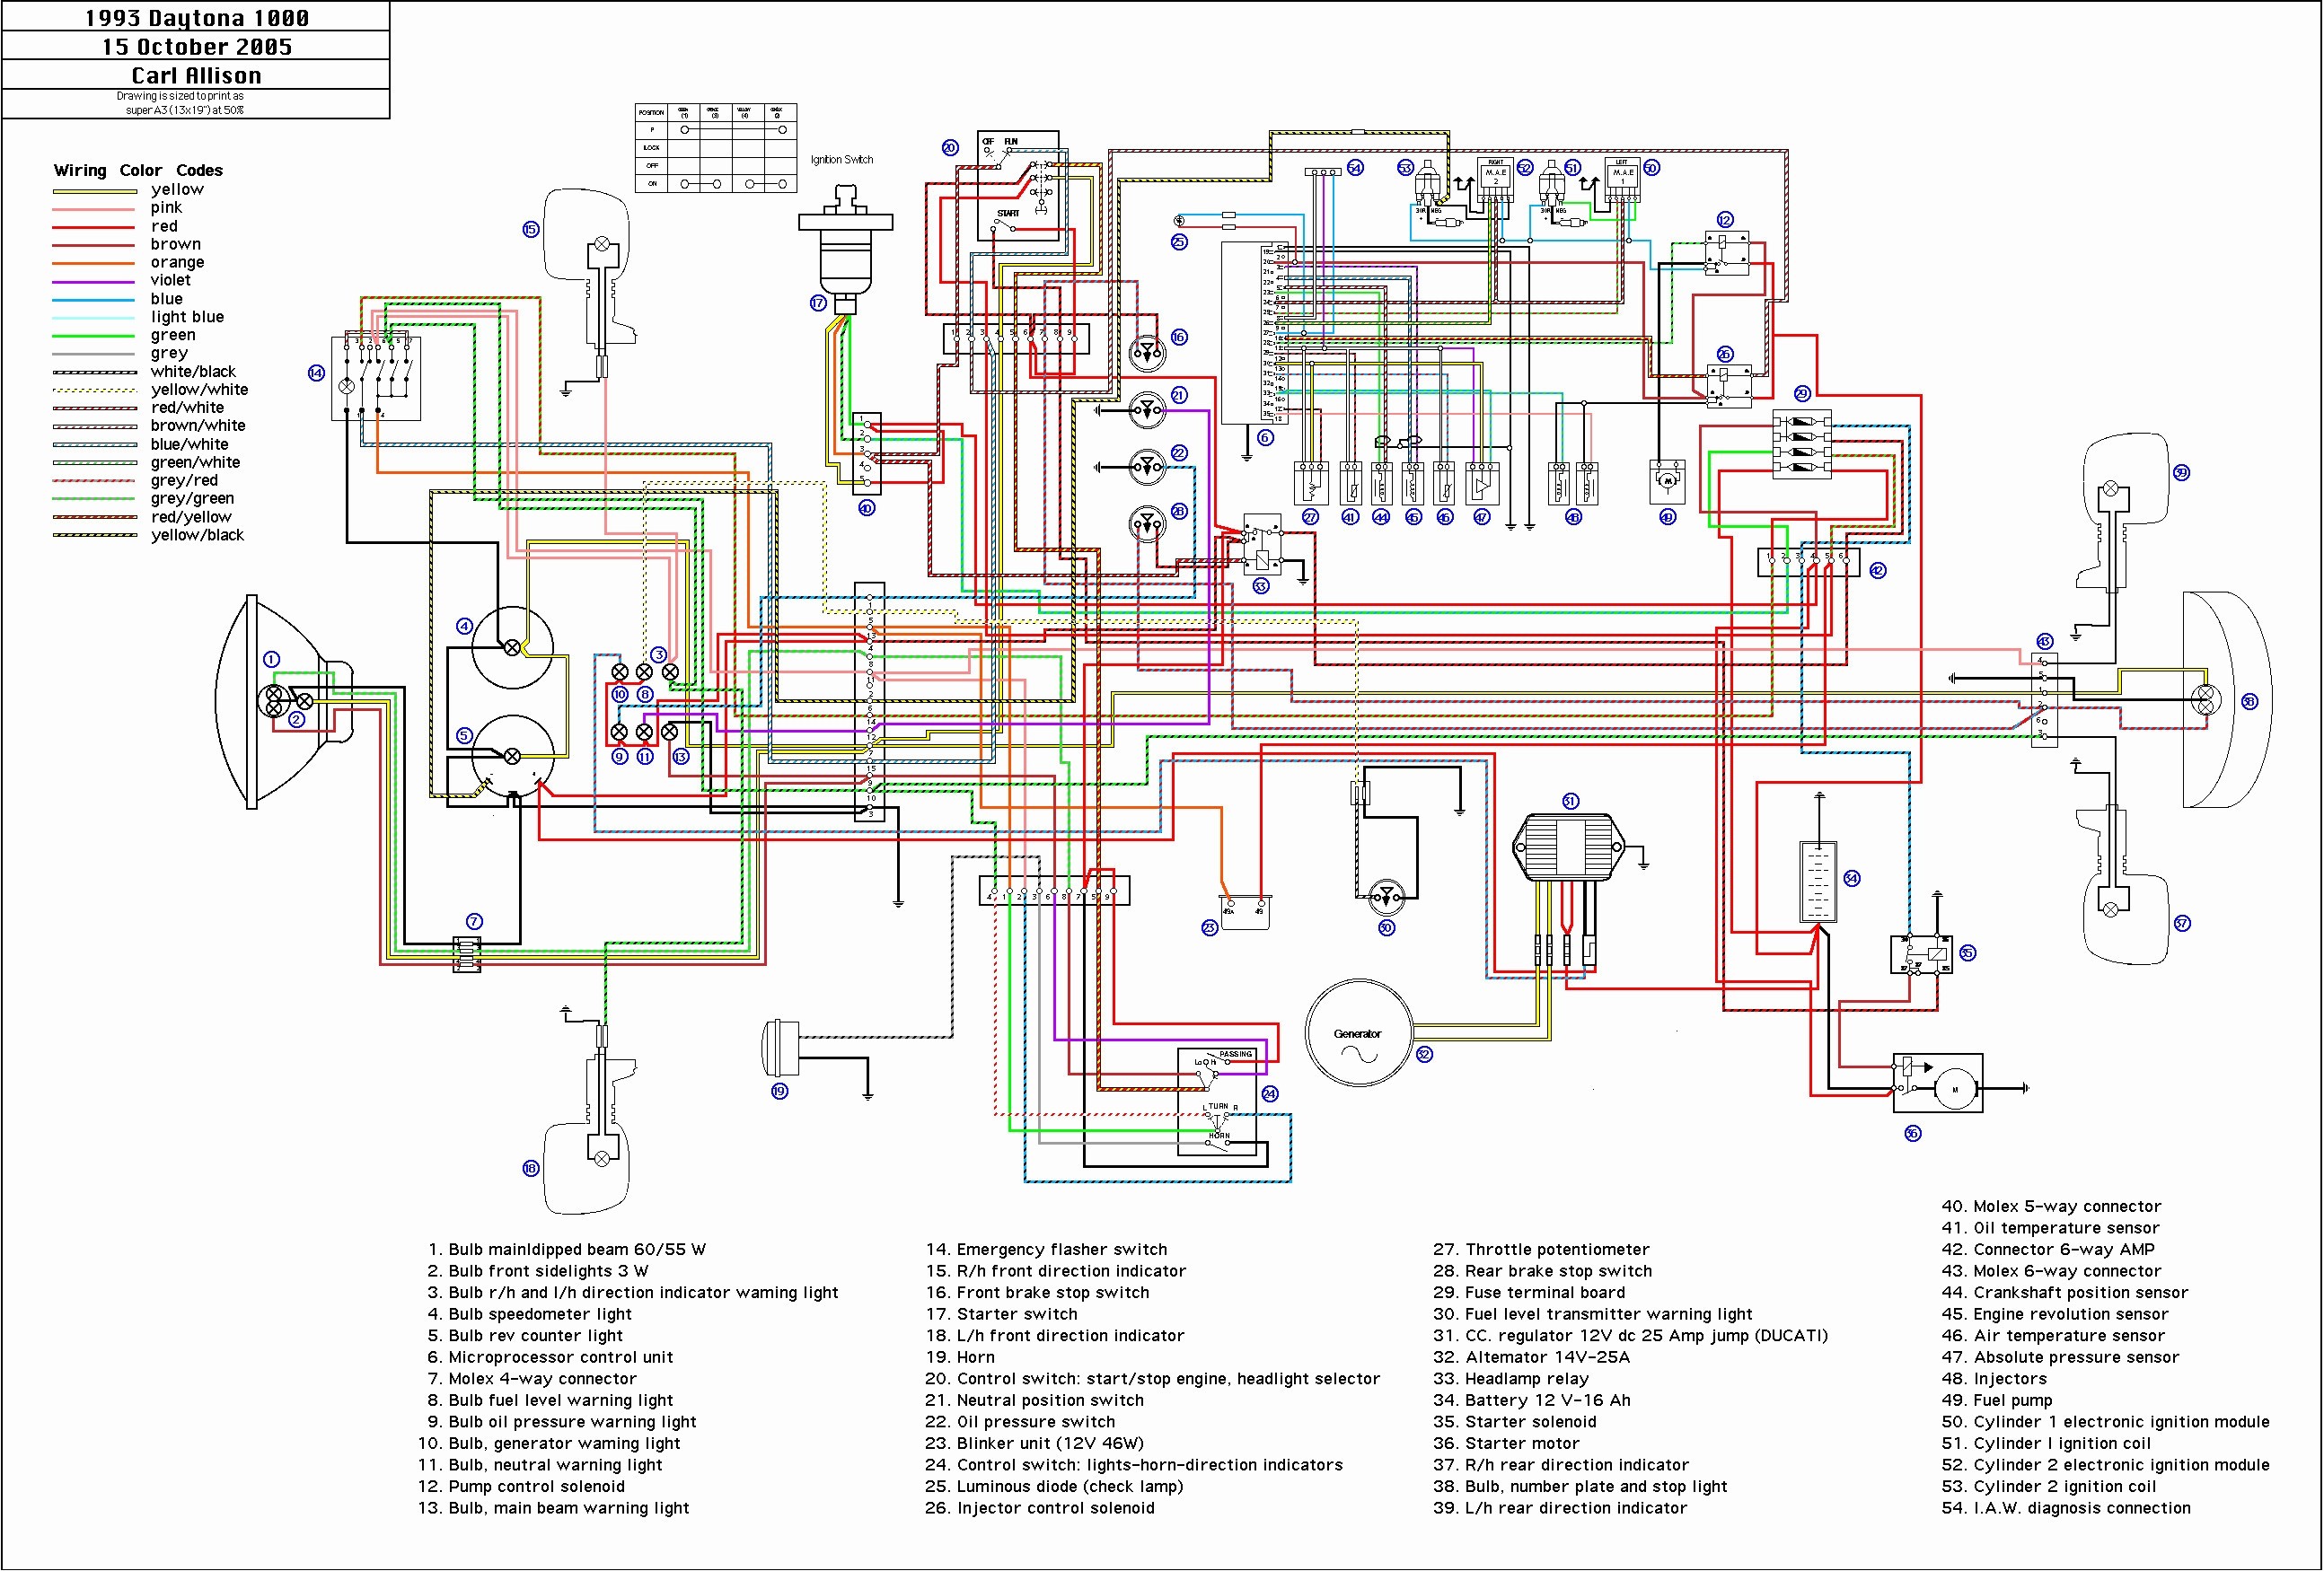 Yamaha Fzr 600 Wiring Diagram Caltric Wiring Diagram Wiring Diagram Go Of Yamaha Fzr 600 Wiring Diagram